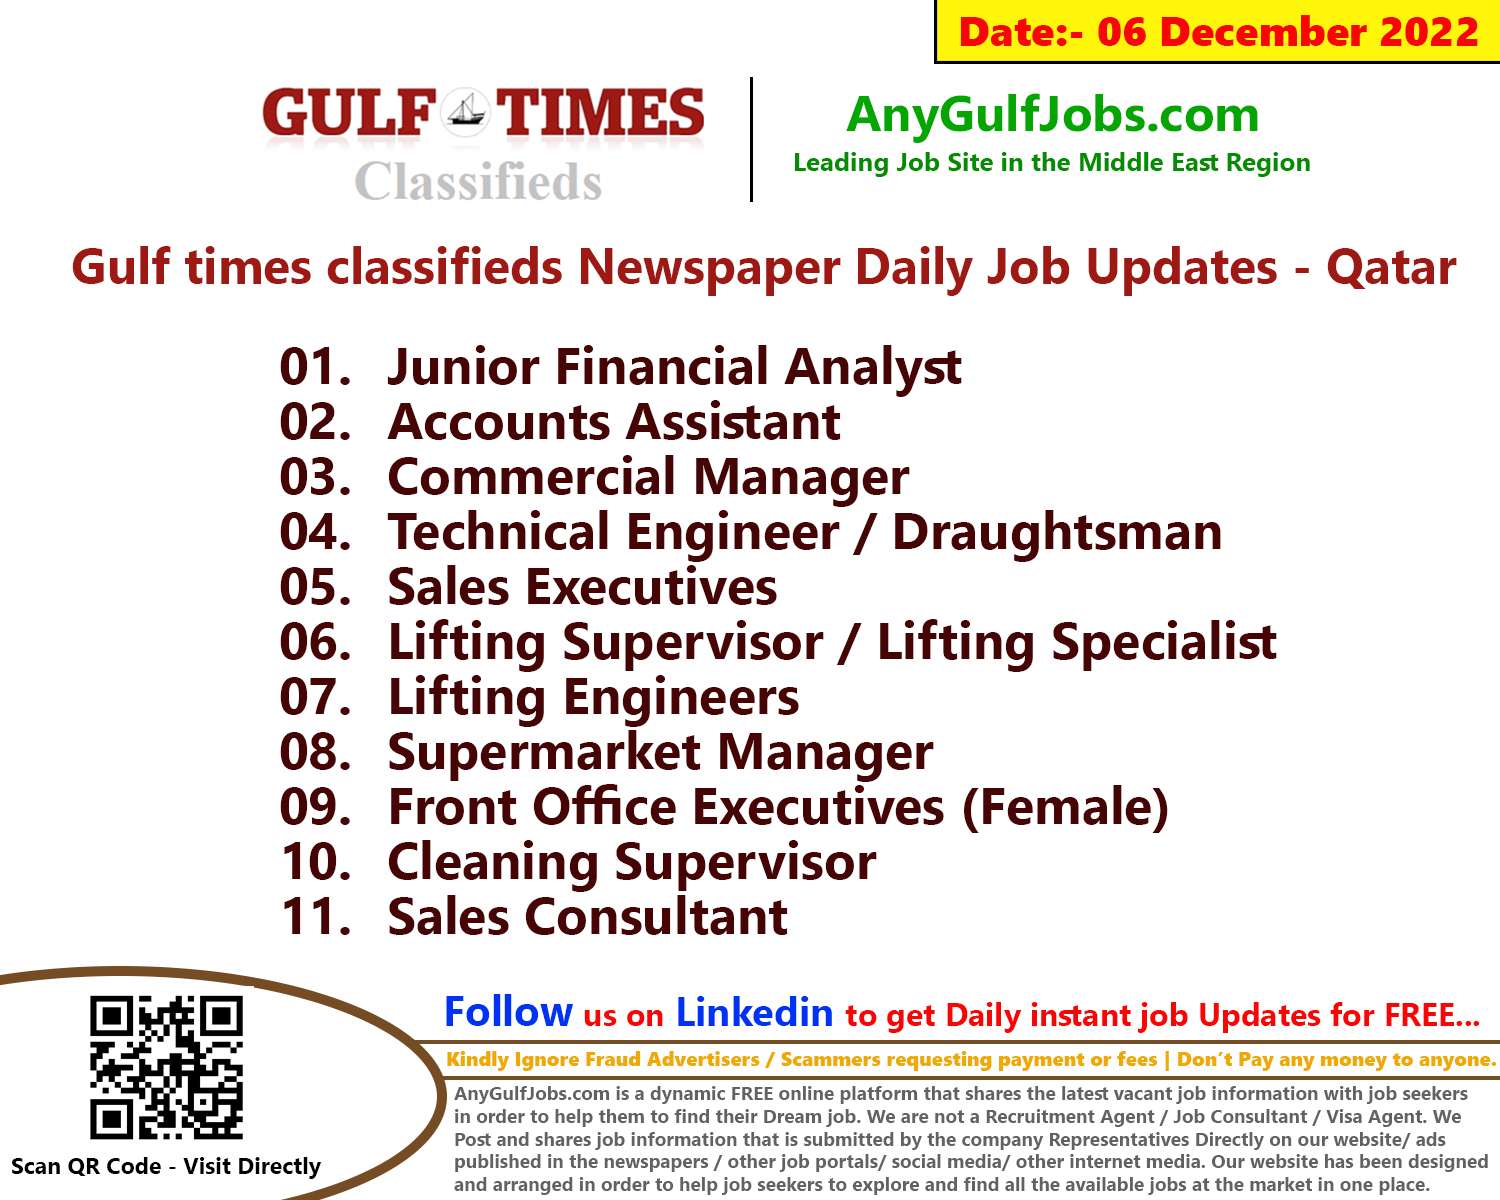 Gulf times classifieds Job Vacancies Qatar - 06 December 2022